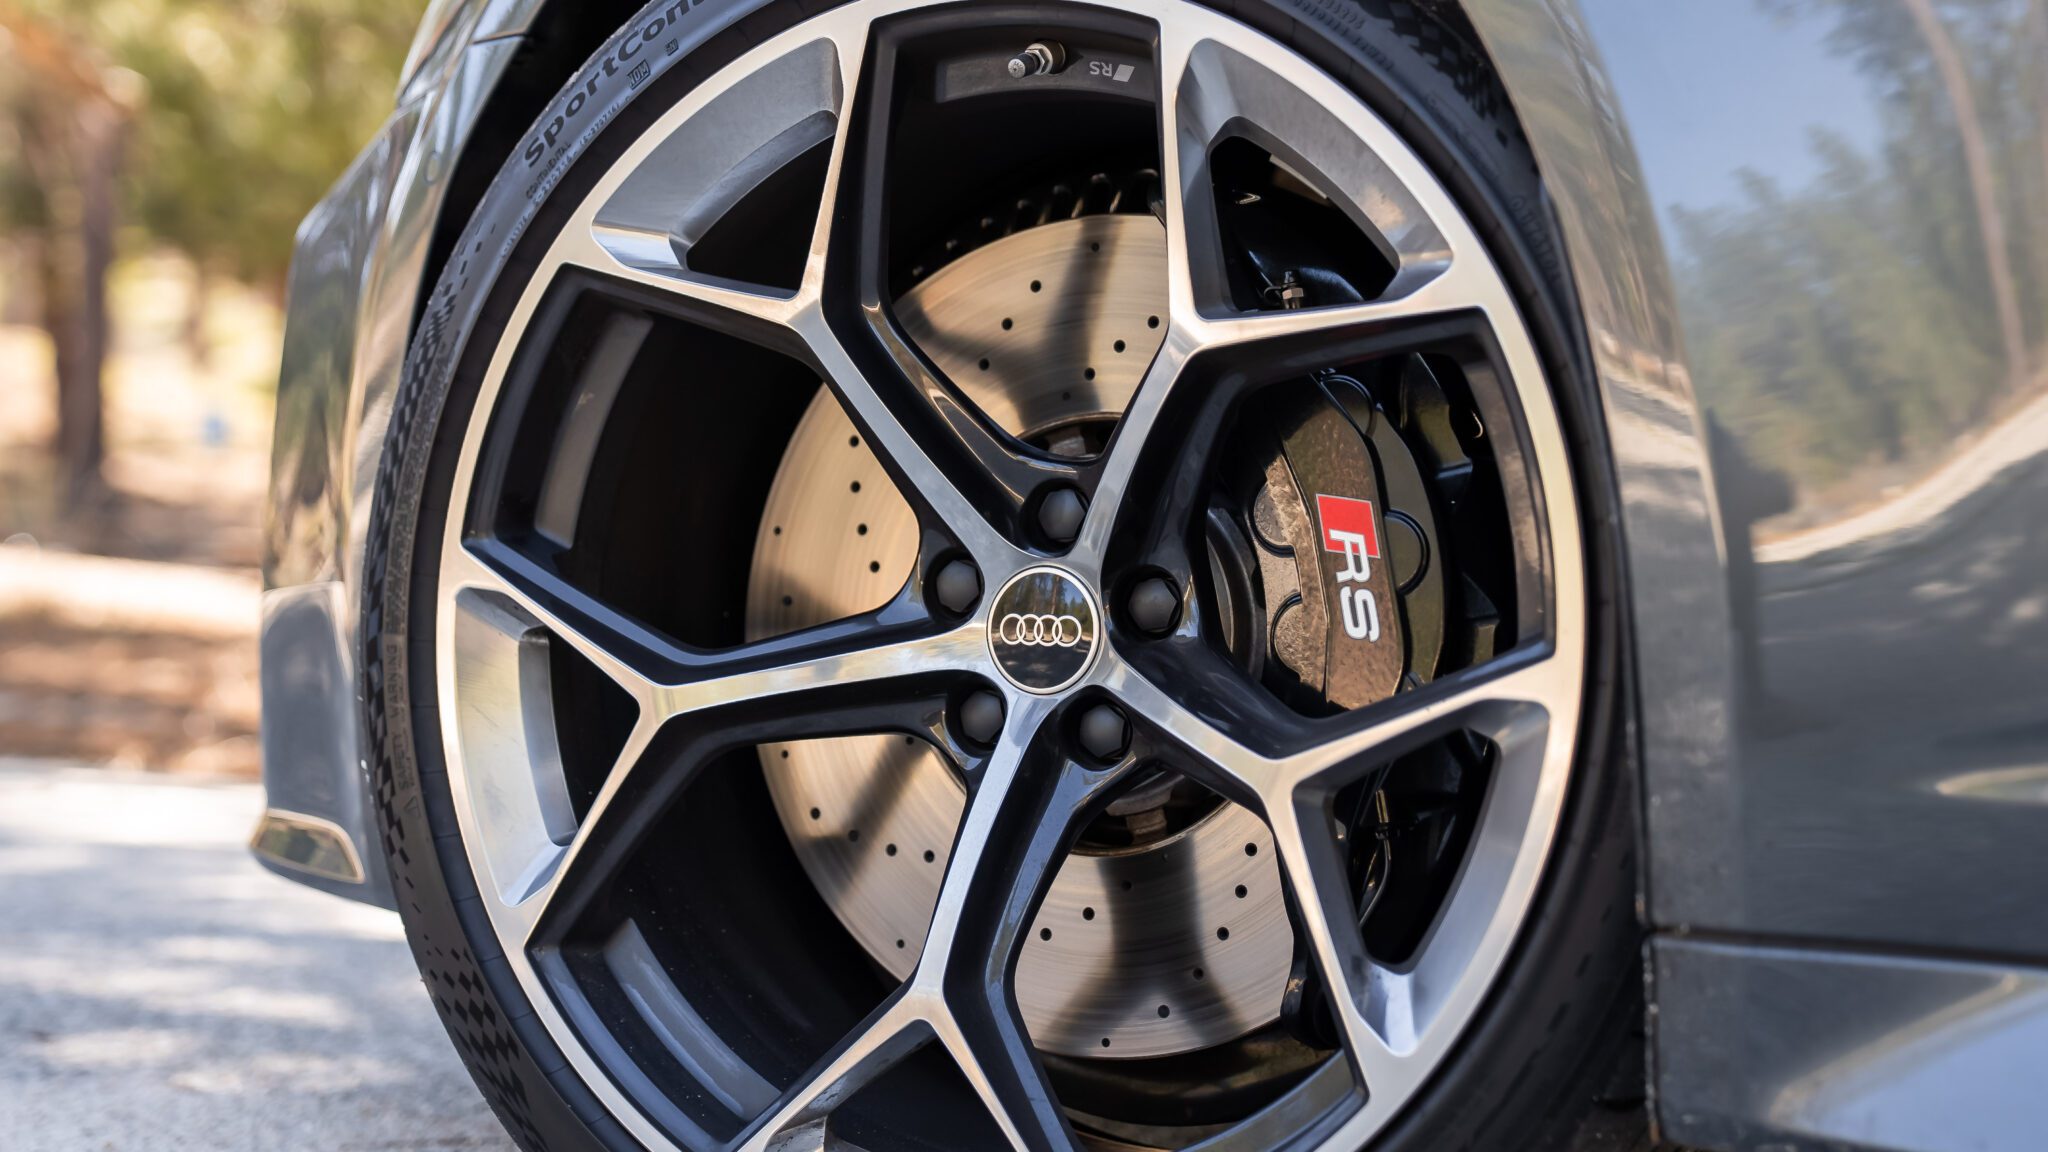 A close up image of a car's wheel.